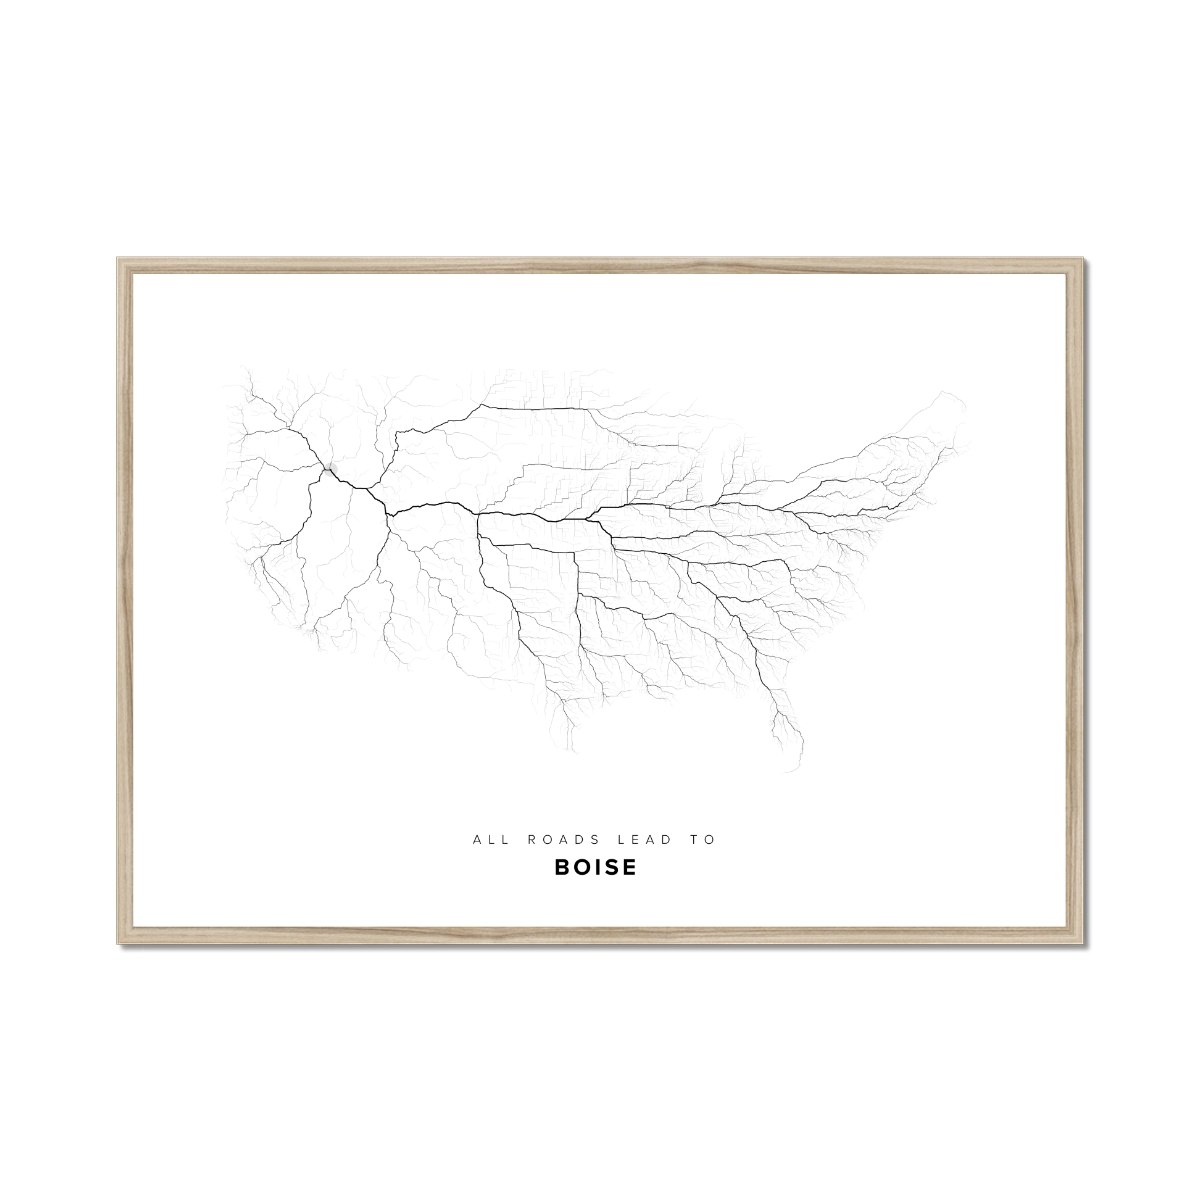 All roads lead to Boise (United States of America) Fine Art Map Print